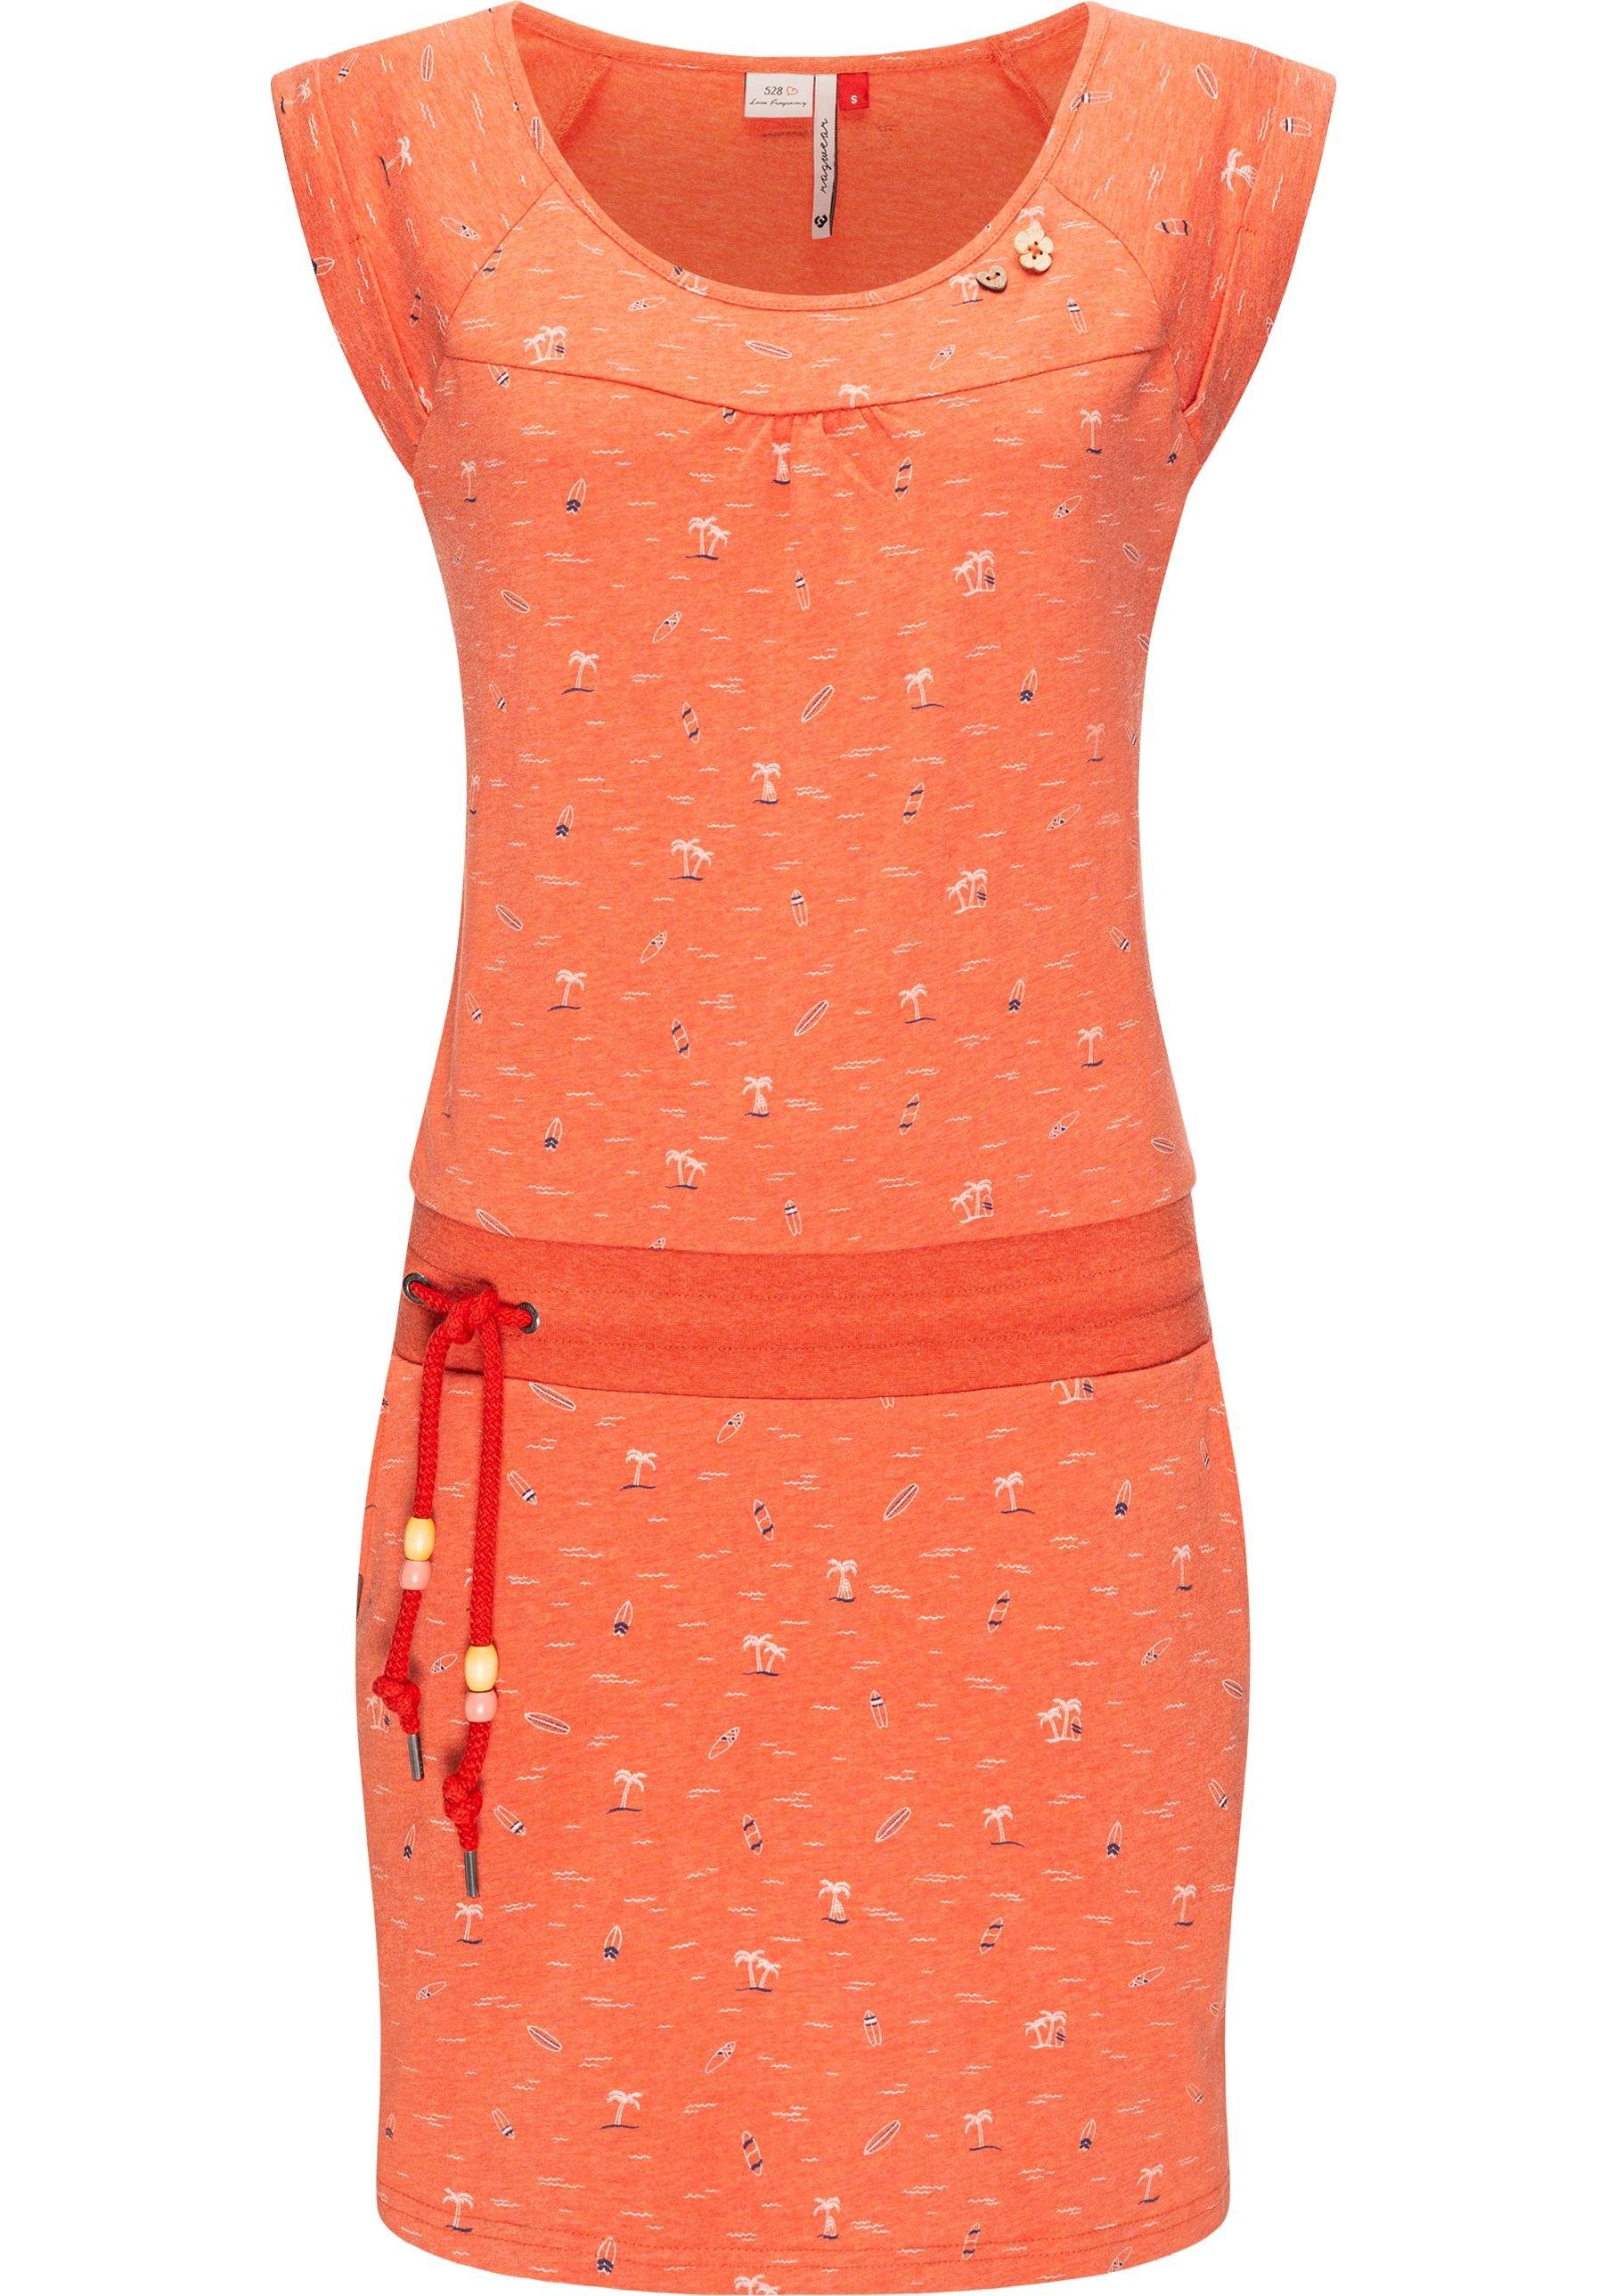 Ragwear Sommerkleid Penelope leichtes Baumwoll Kleid mit Print orangerot